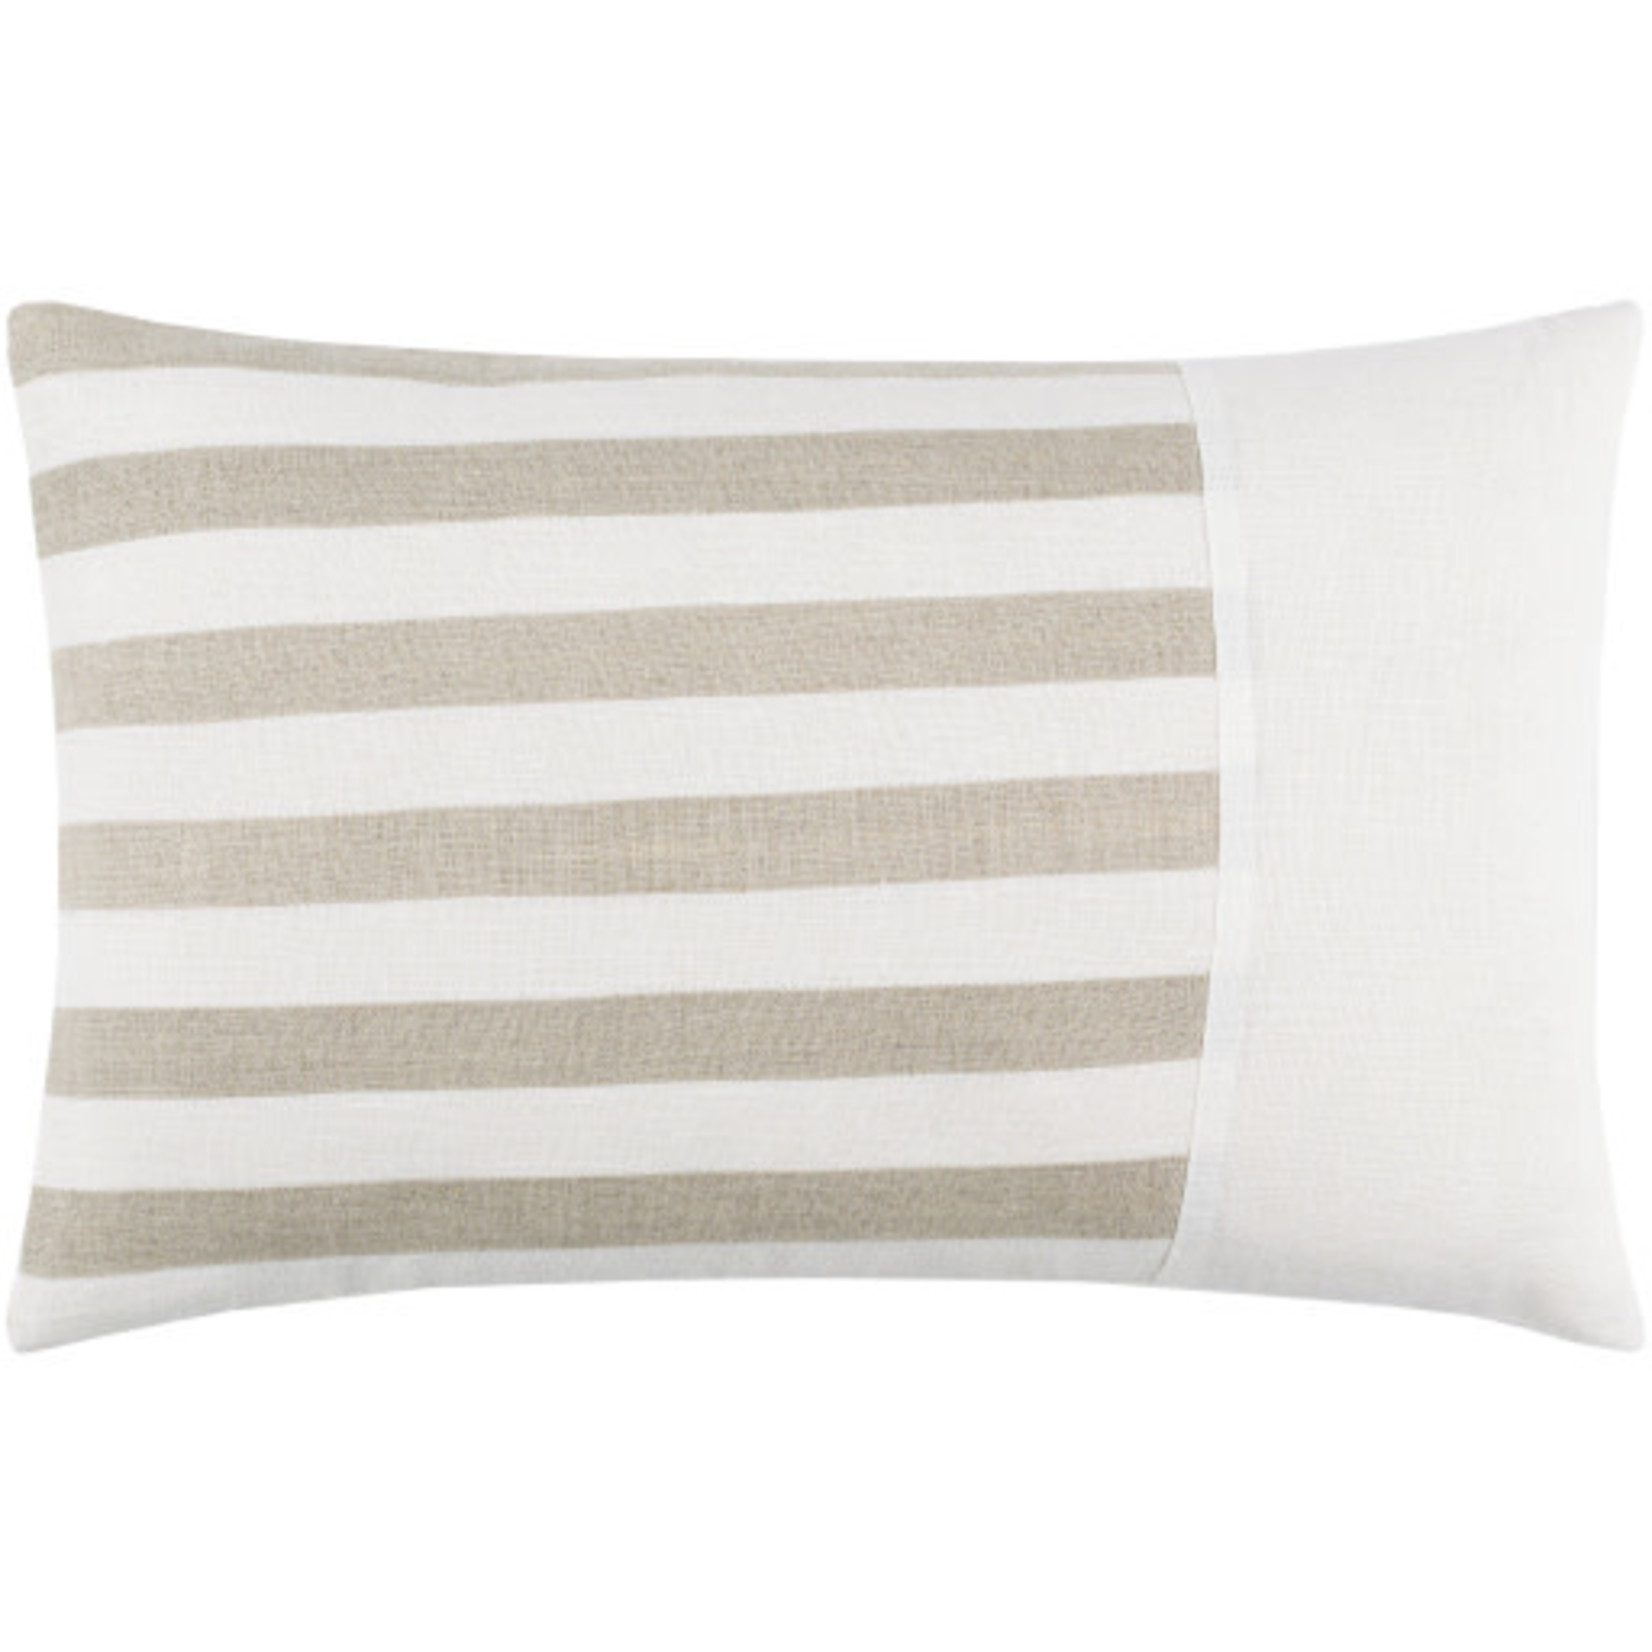 Mickler & Co. Roxy Striped Lumbar Pillow